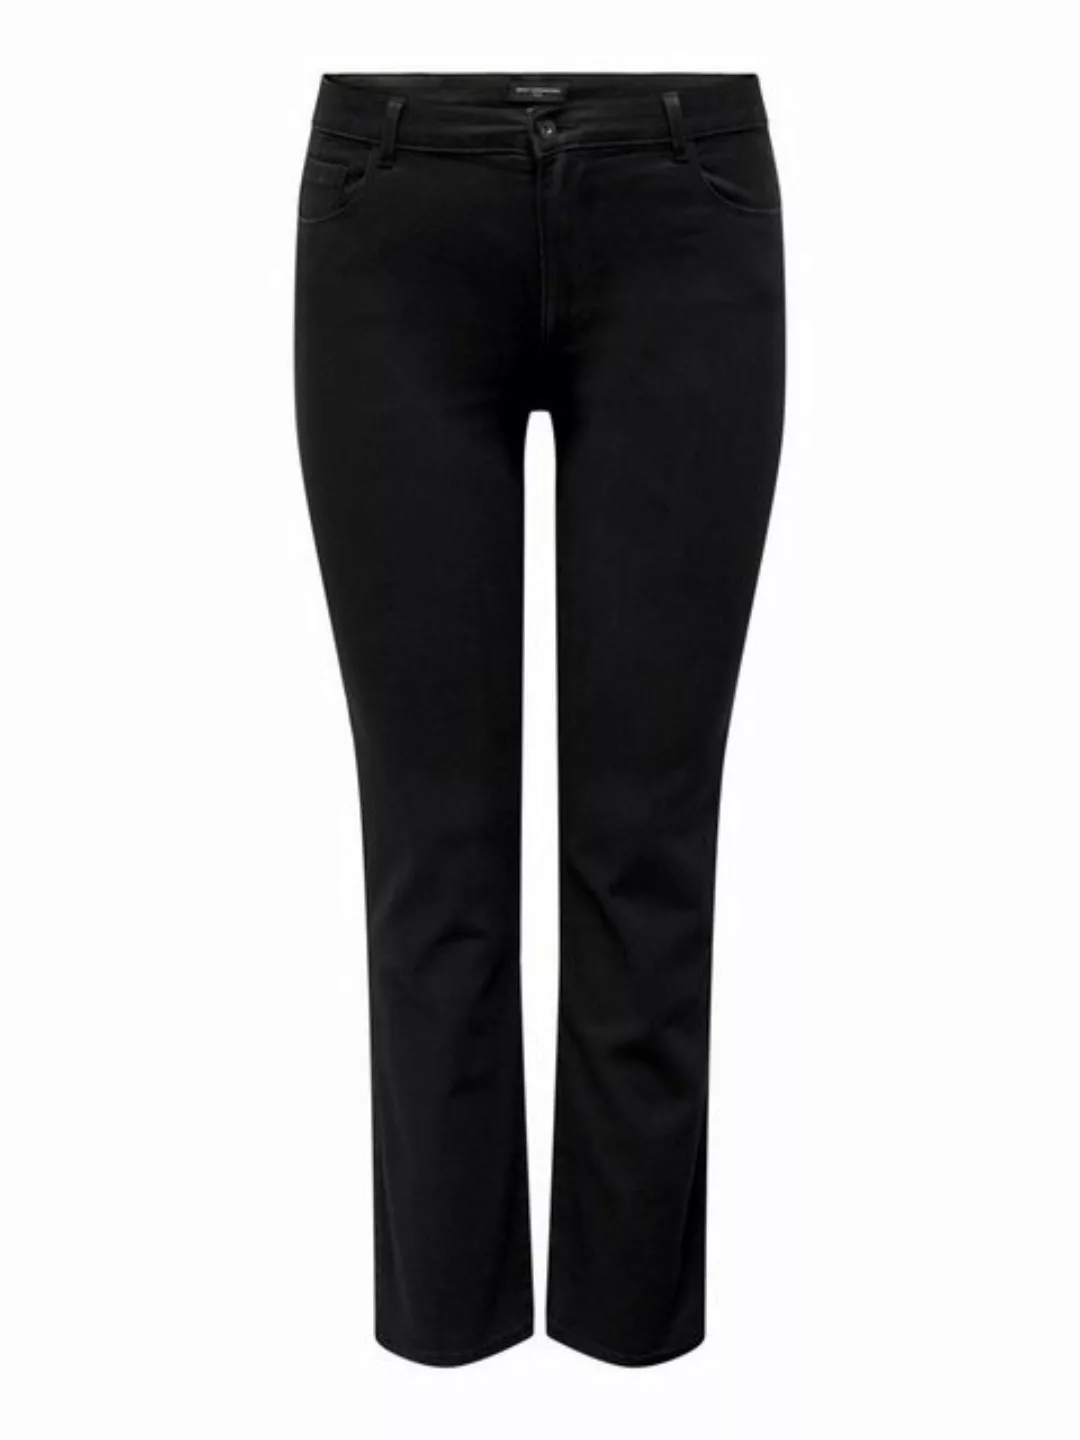 Carmakoma by Only Damen Jeans CARAUGUSTA BLACK - Skinny Fit - Schwarz - Bla günstig online kaufen